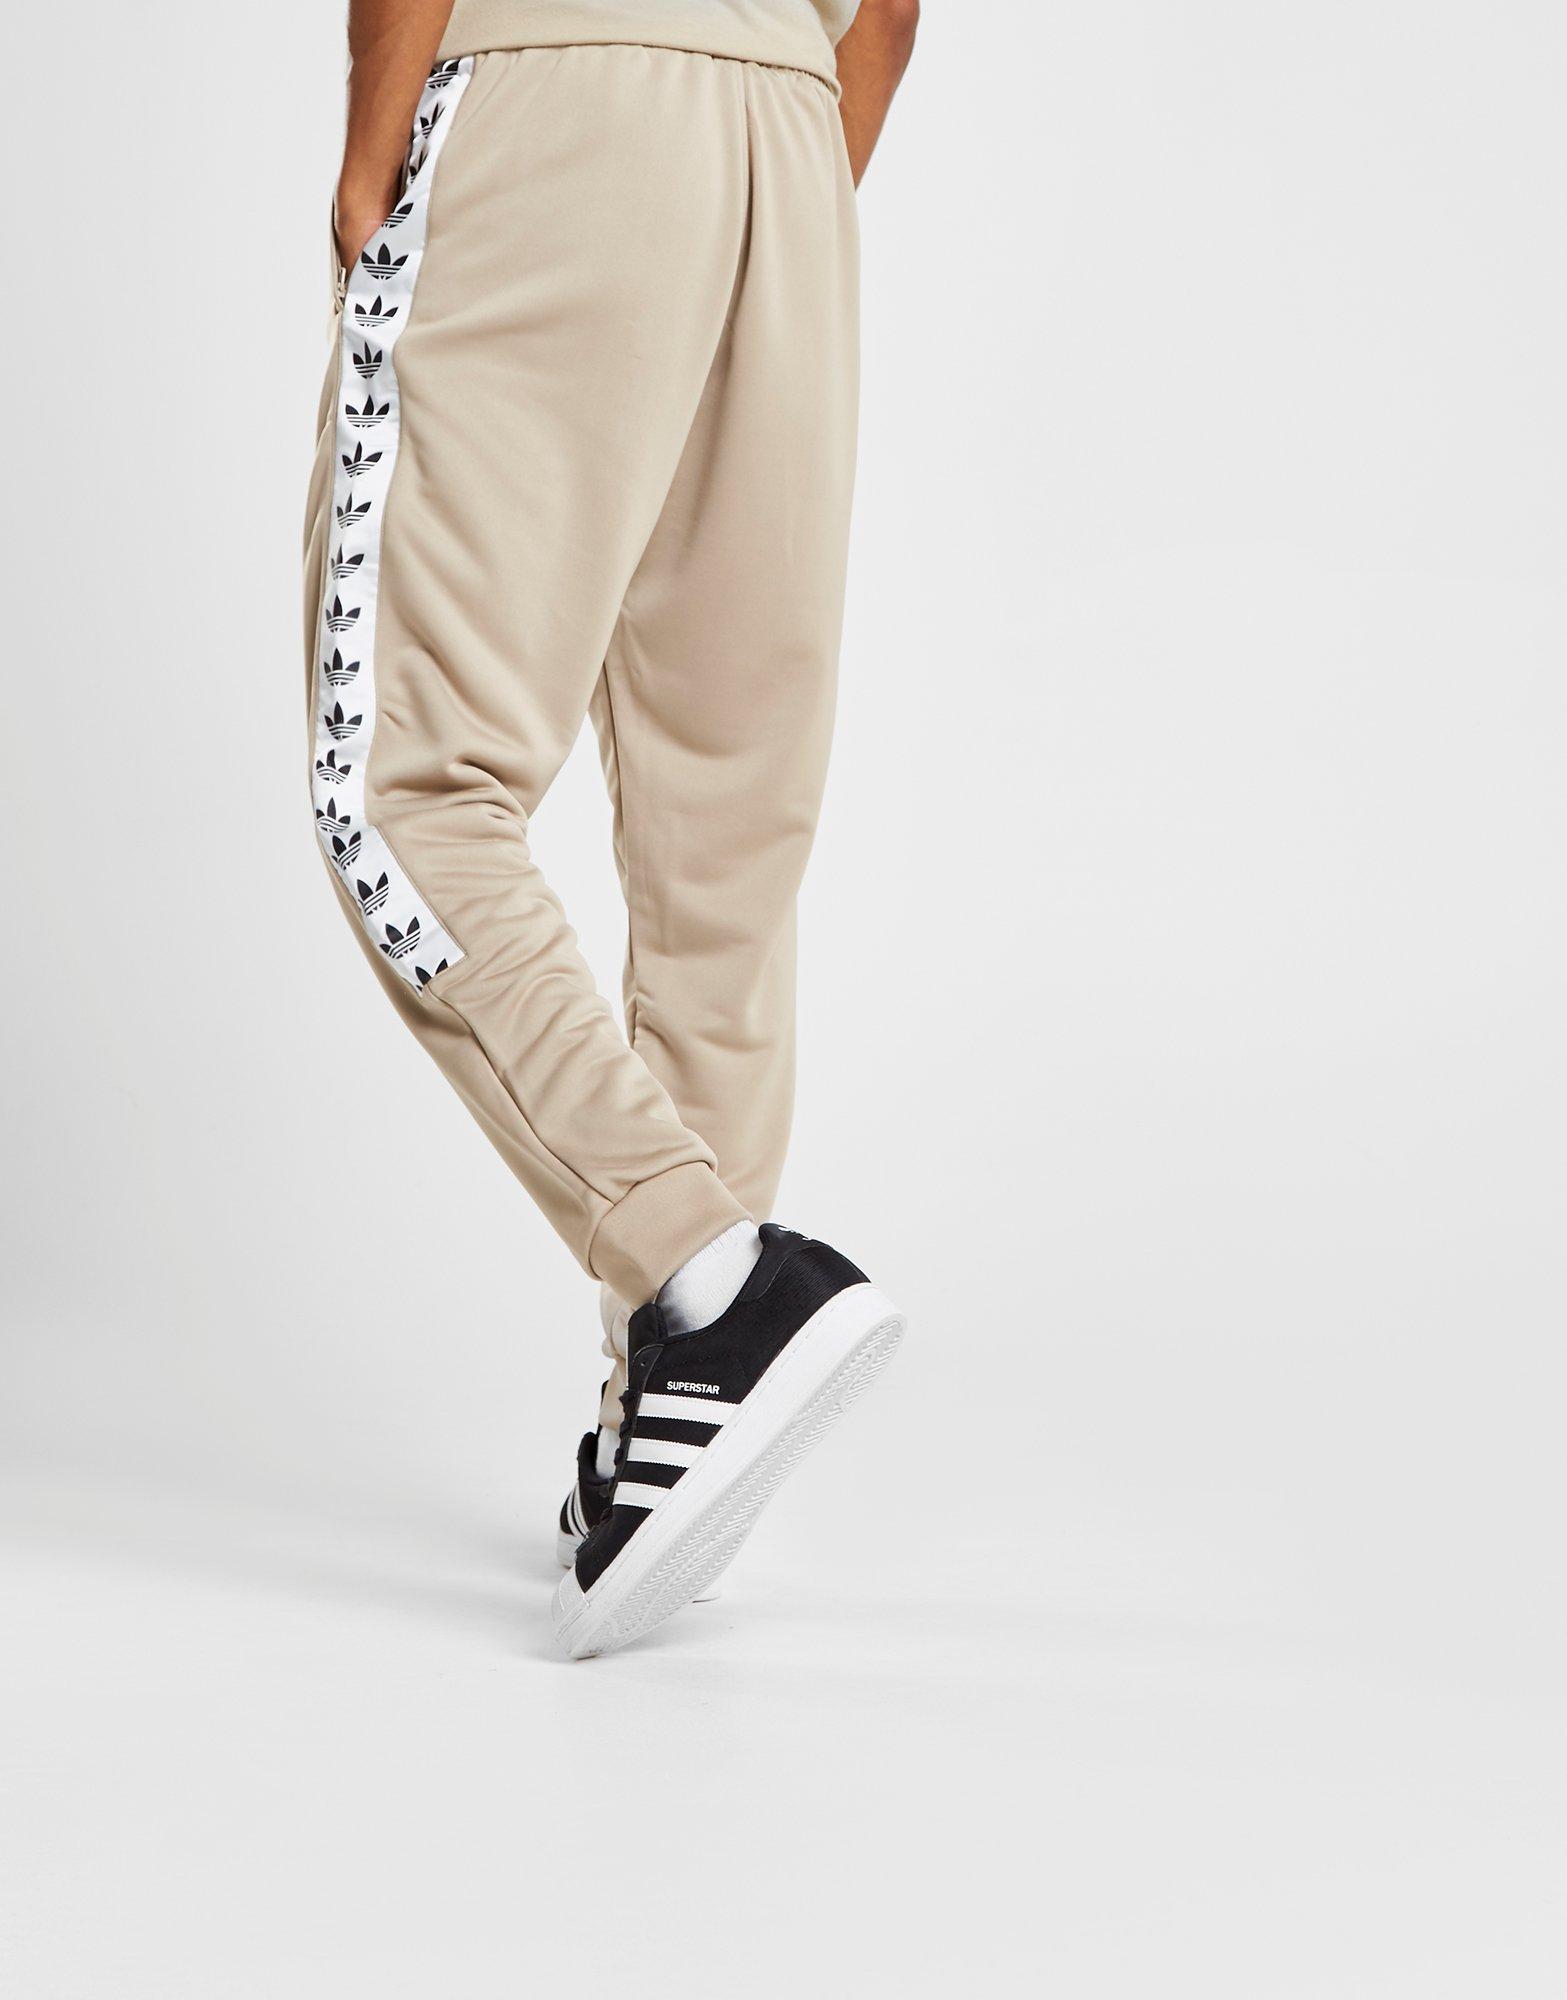 Adidas Originals Taped Poly Track Pants Sale Discount, 67% OFF |  maikyaulaw.com